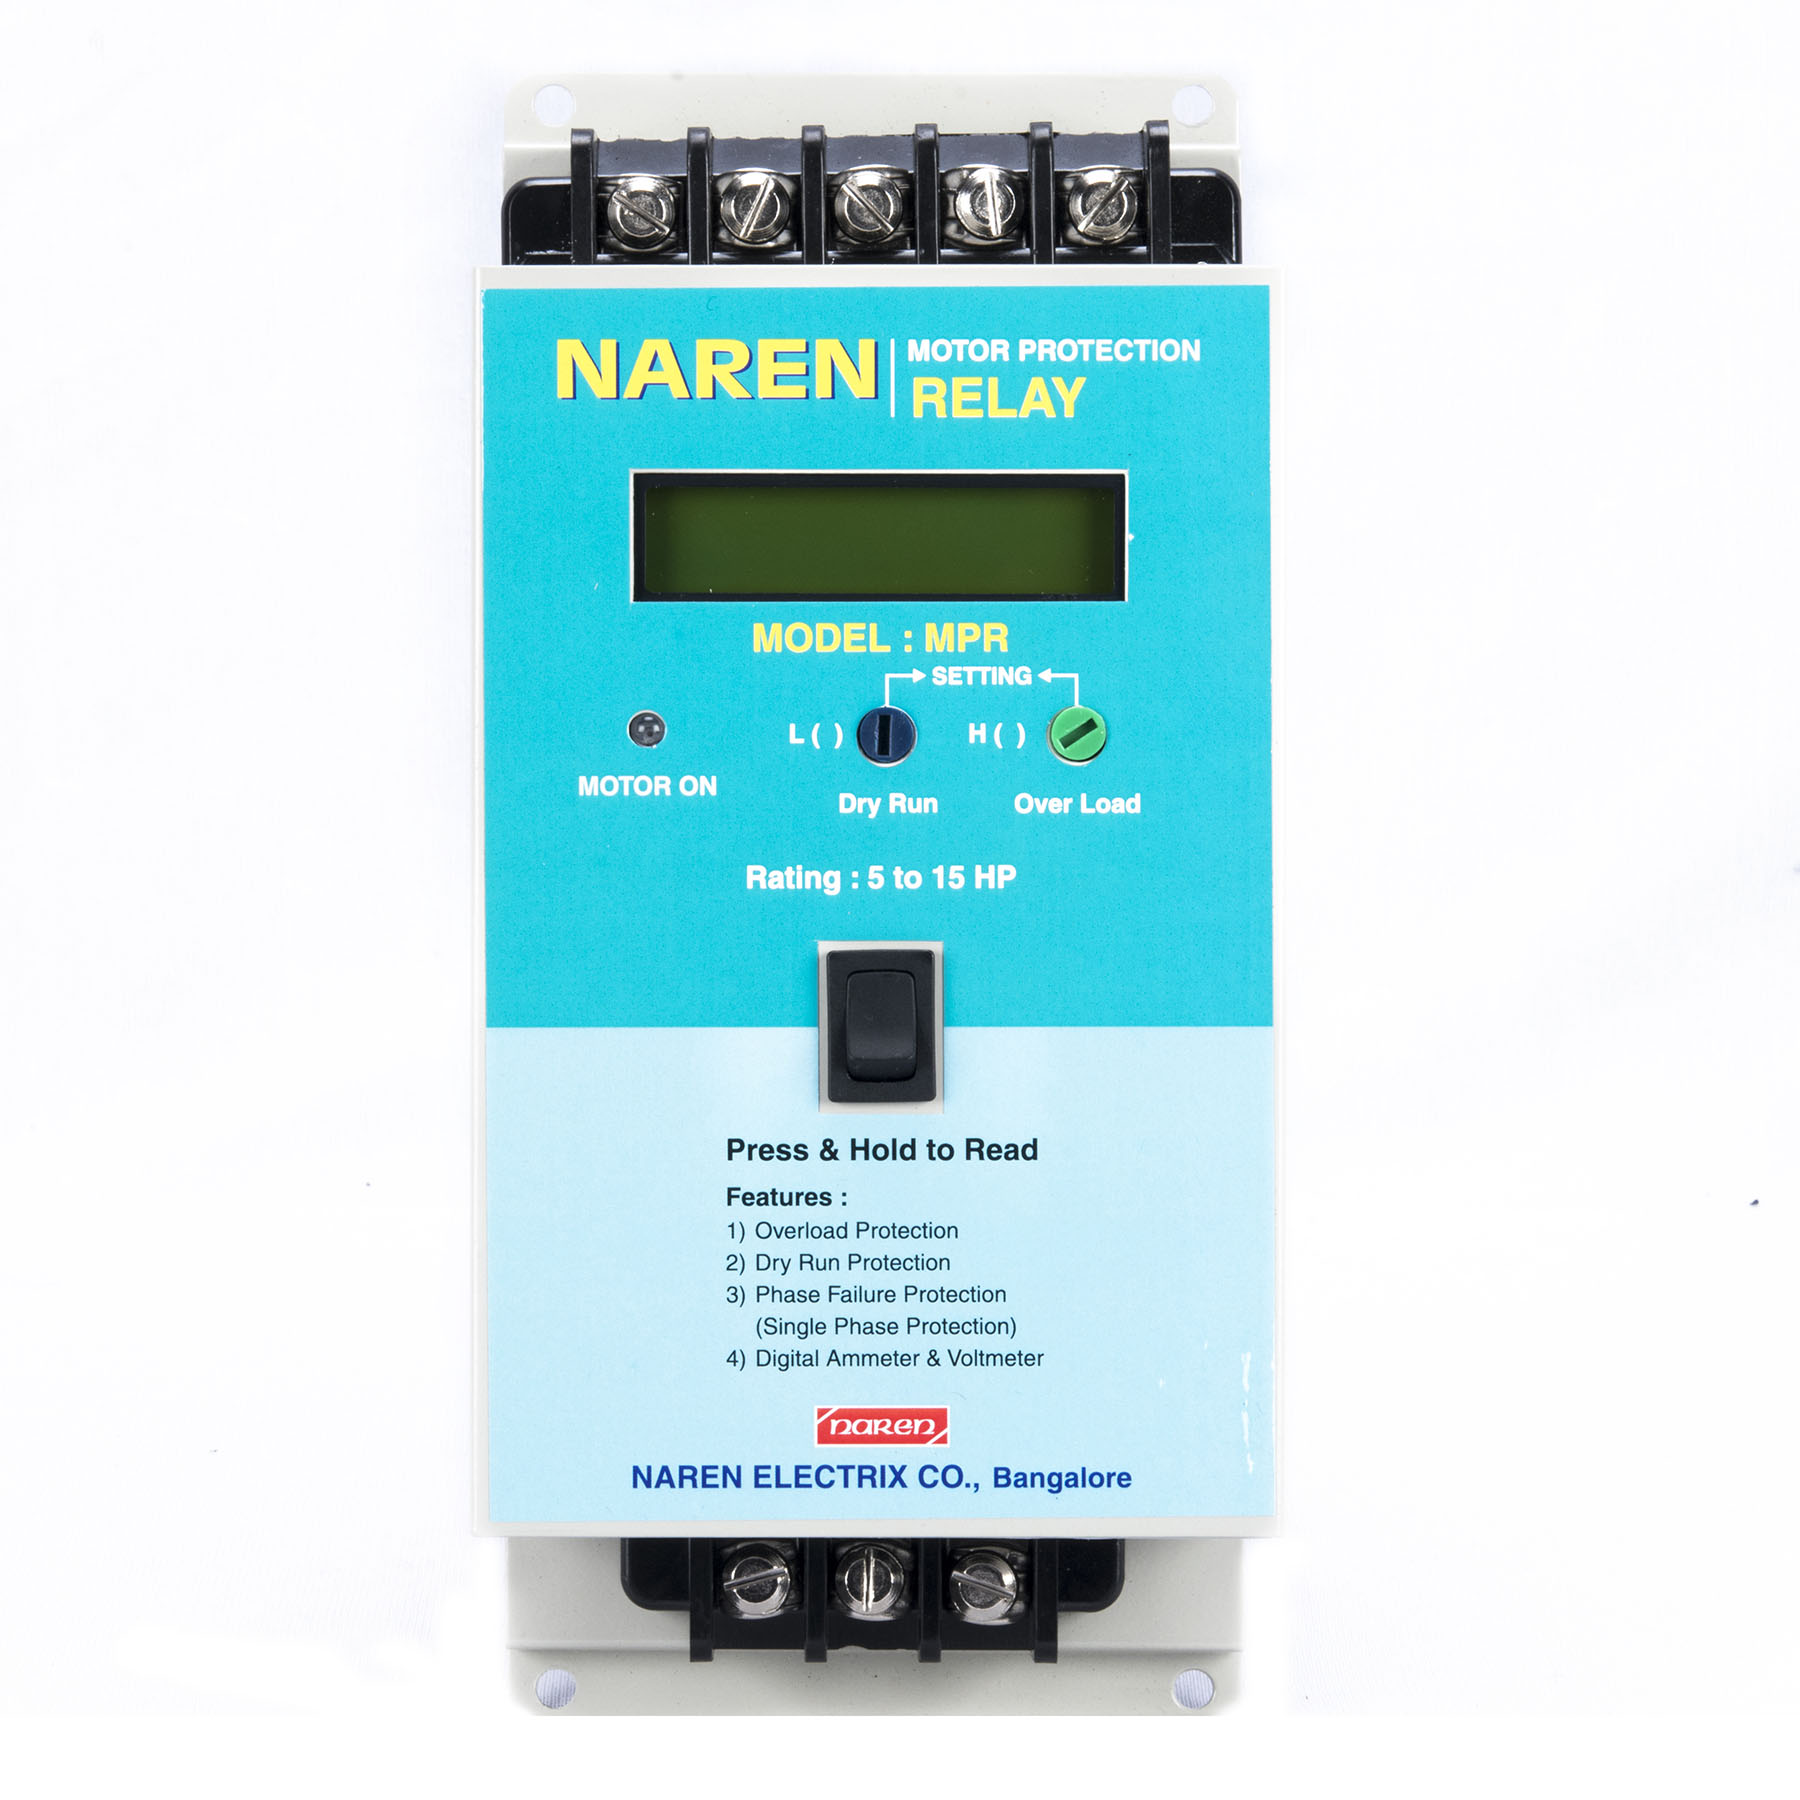 Naren Motor Protection Relay Model - MPR